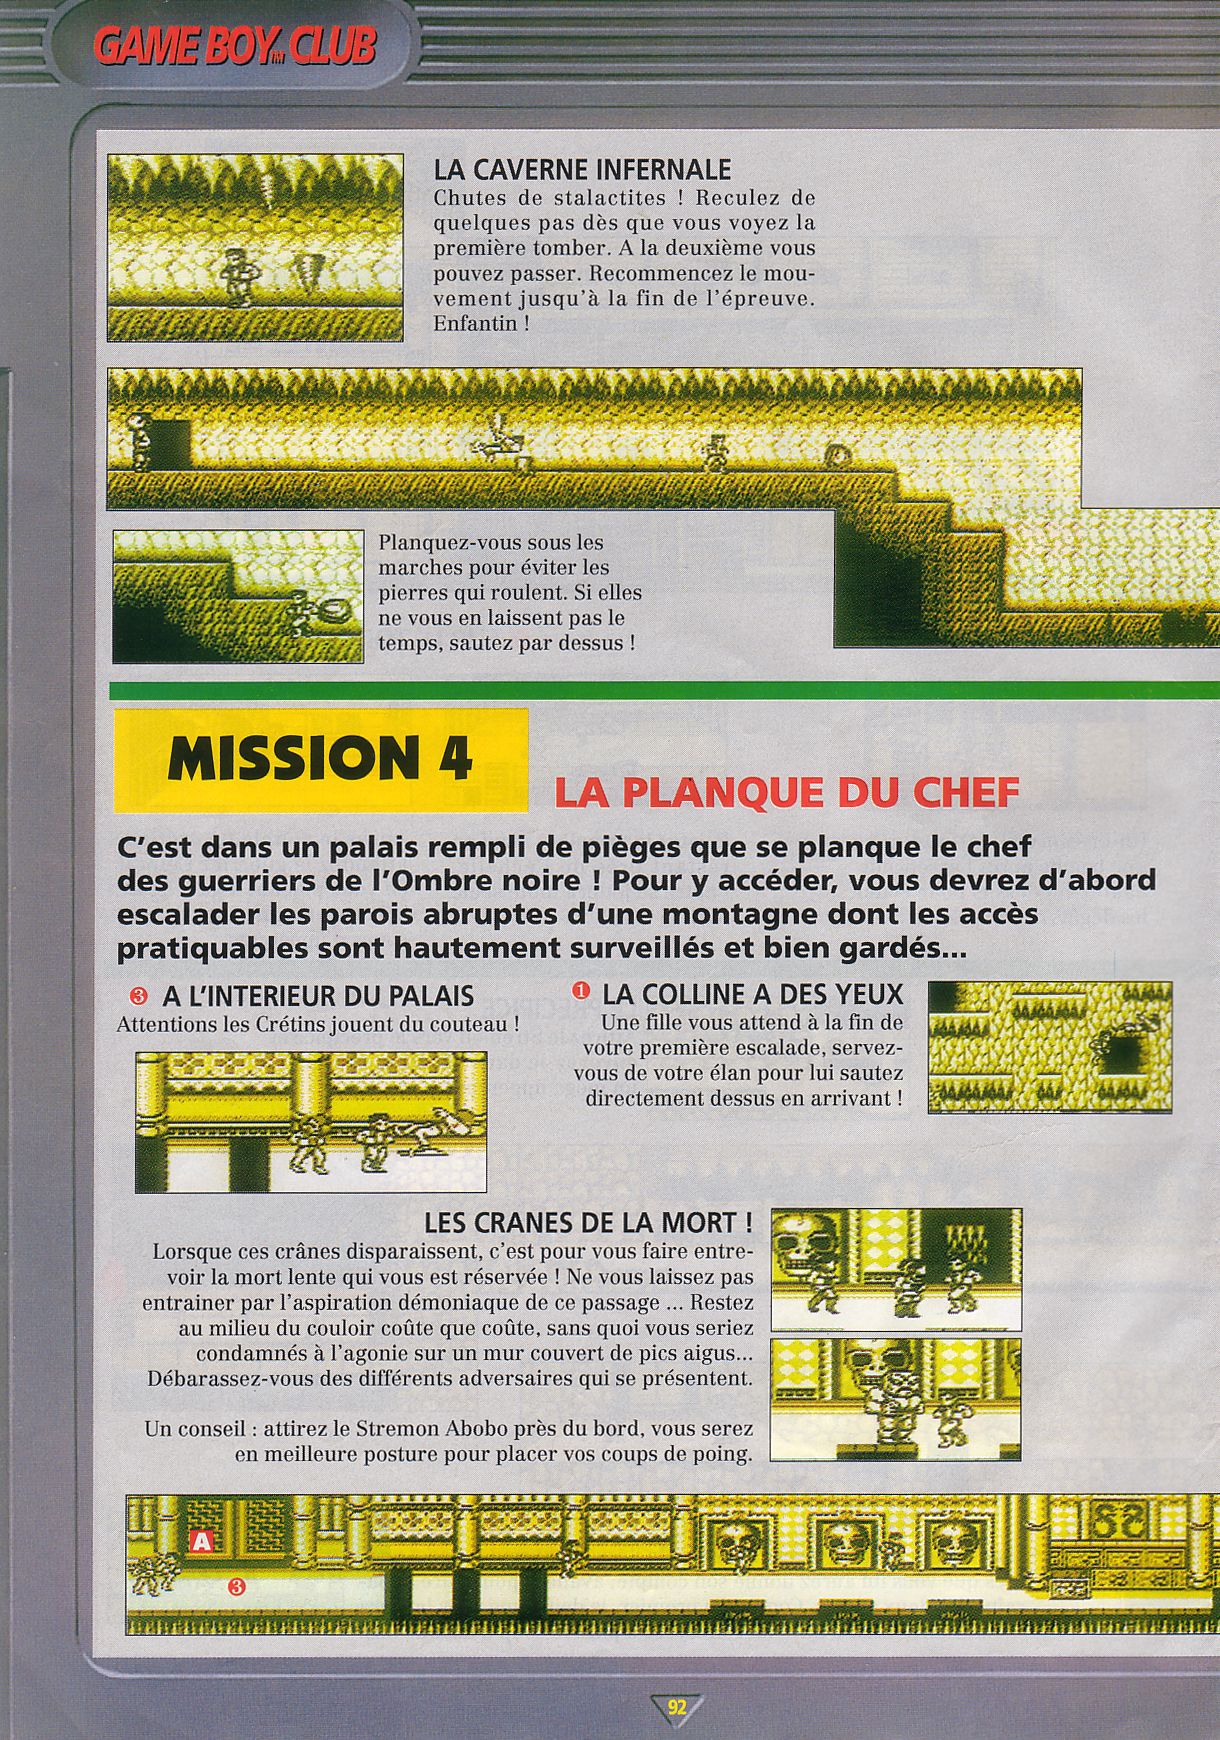 tests//695/Nintendo Player 005 - Page 092 (1992-07-08).jpg